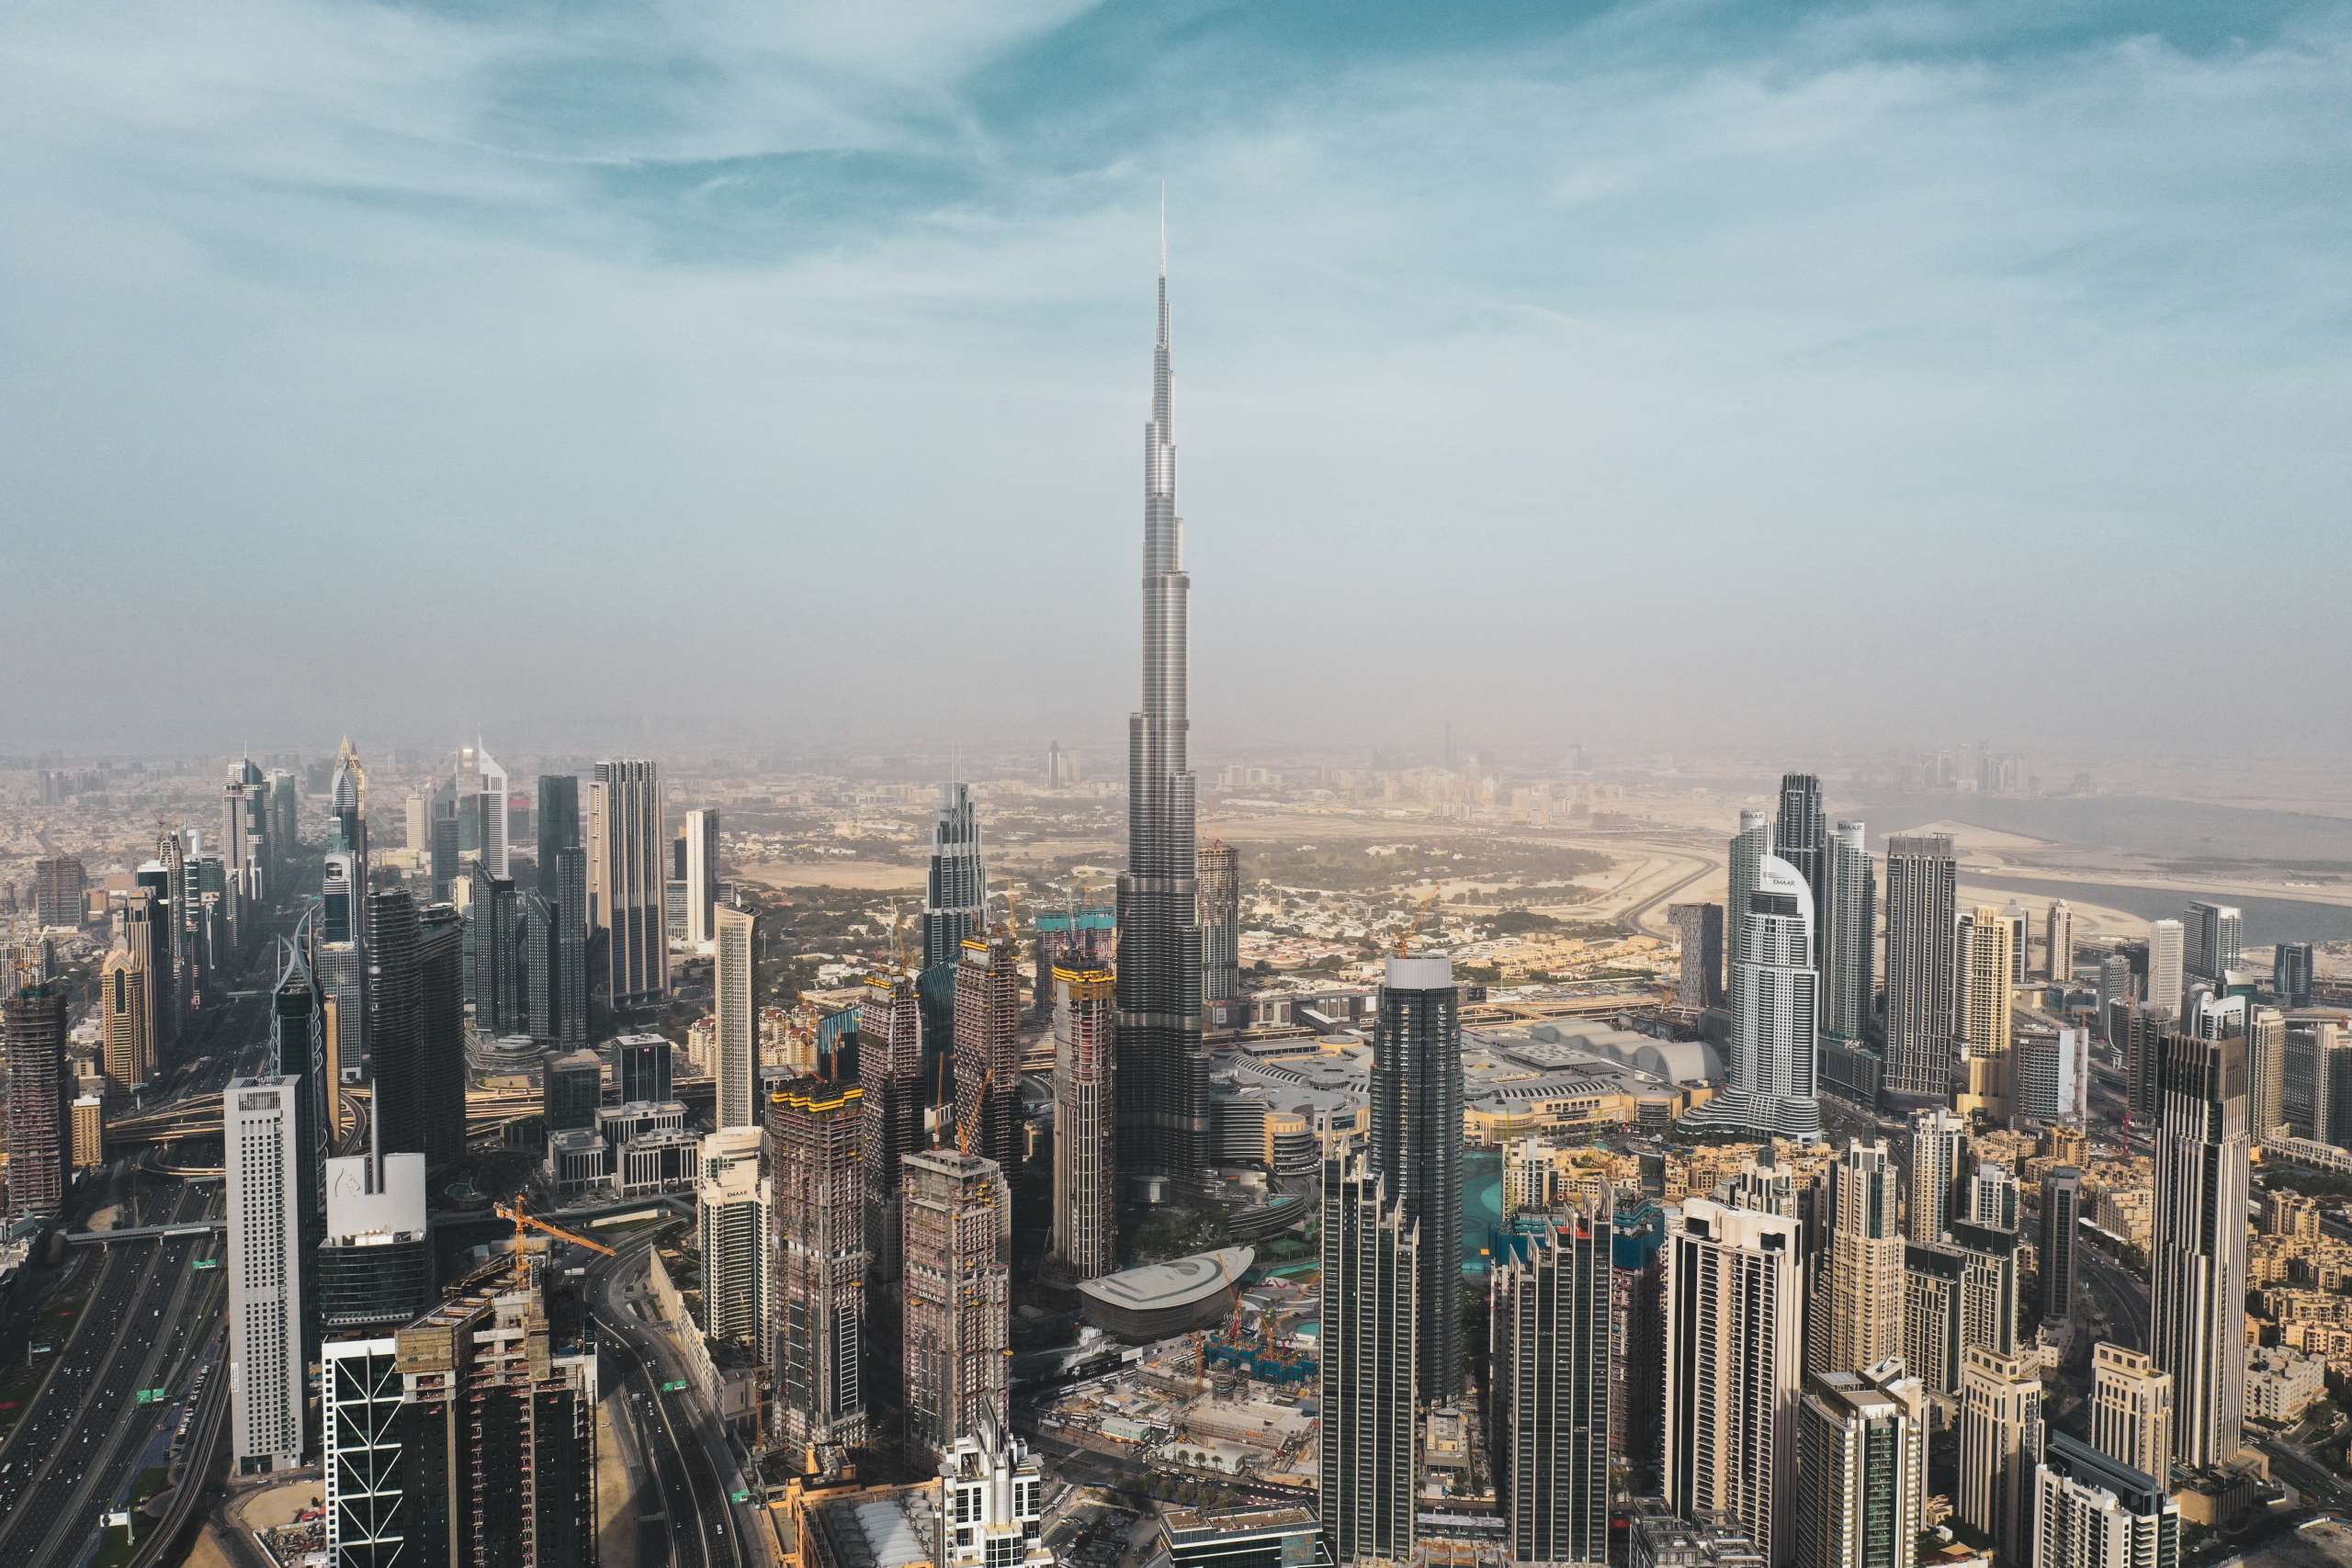 Get My Junk UAE - Real Estate Dubai scaled